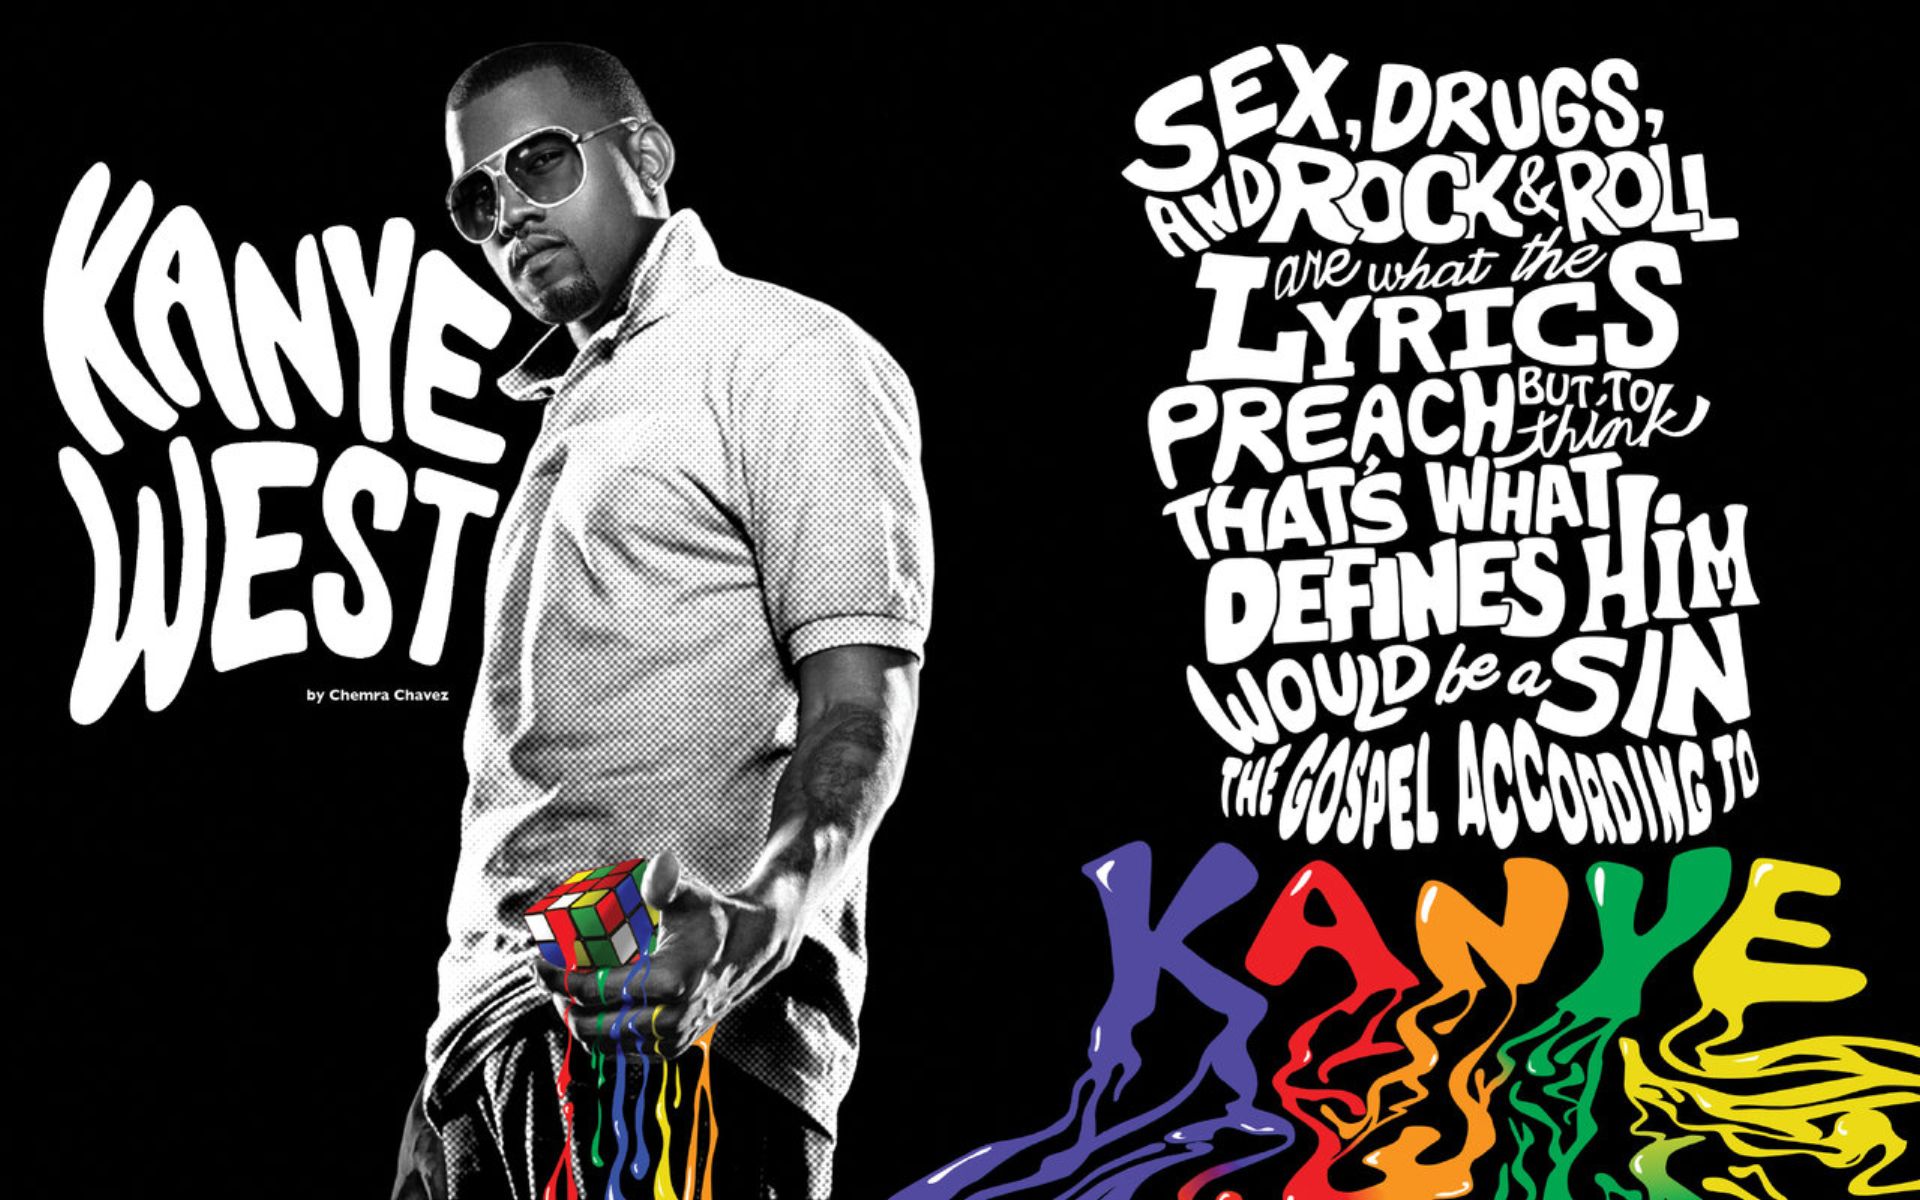 FunMozar Kanye West Wallpapers